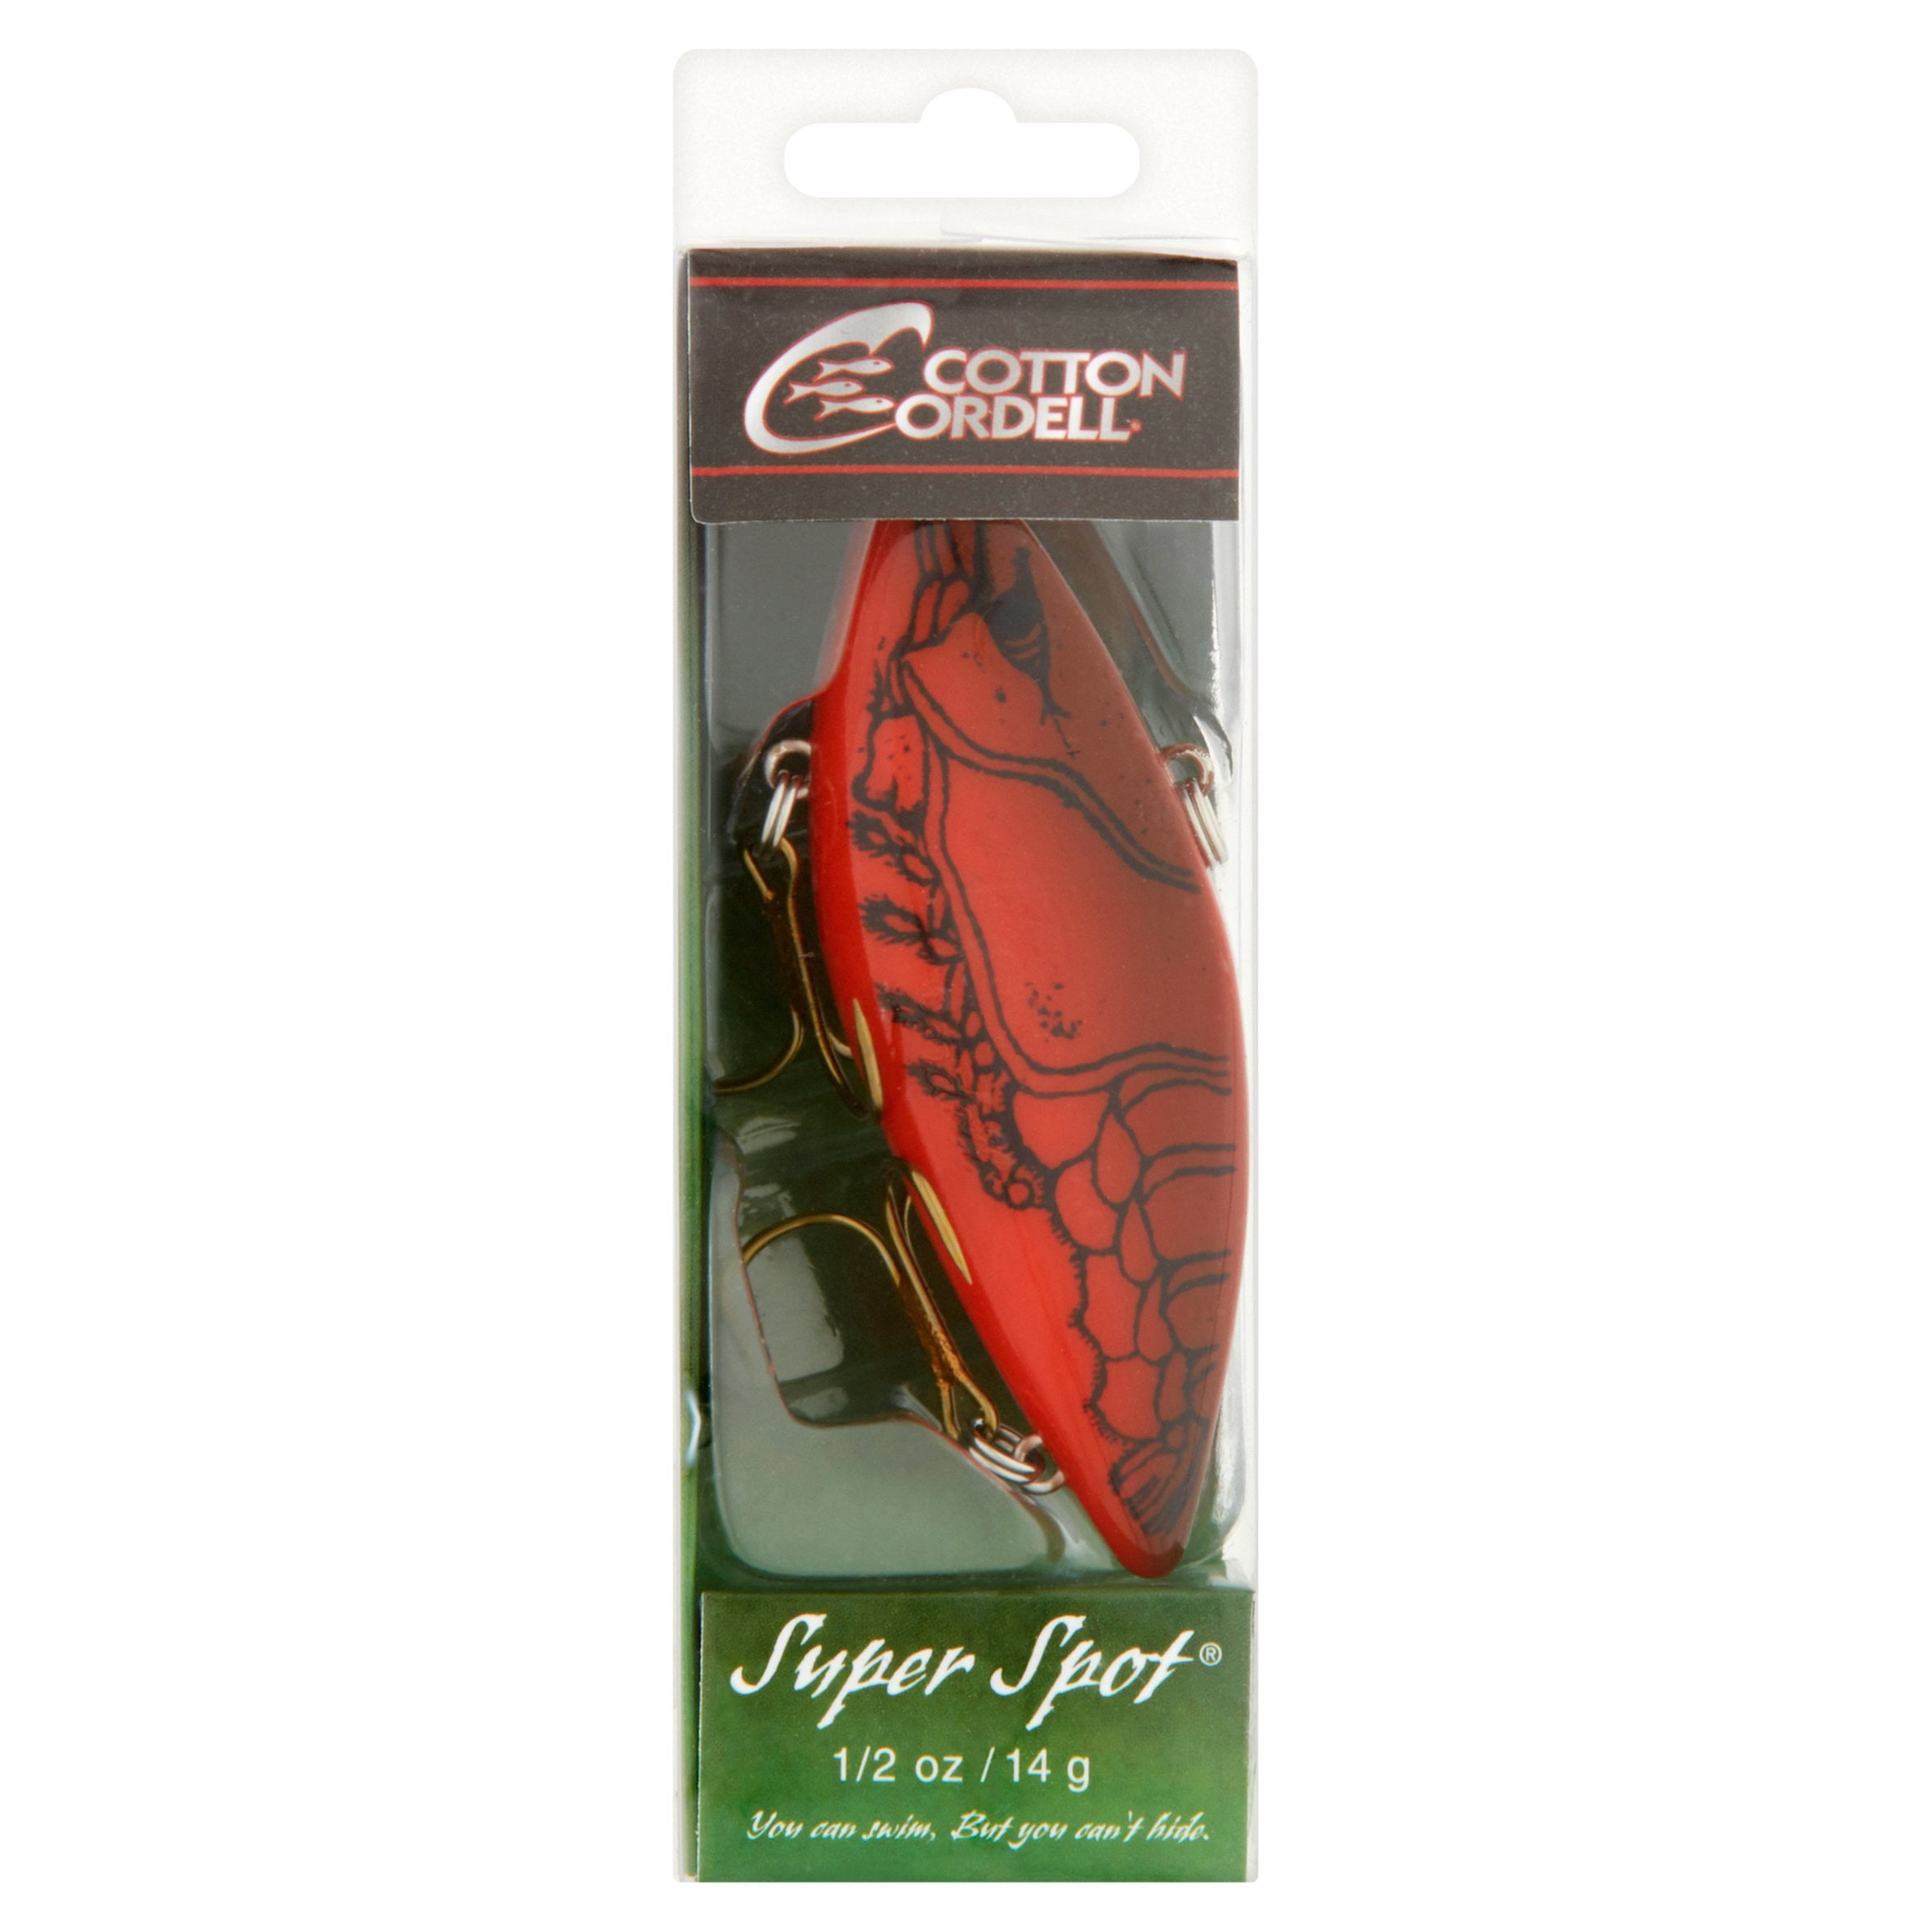 Cotton Cordell Super Spot Lipless Crankbait 3 inch Red Craw Lure 1/2 oz.